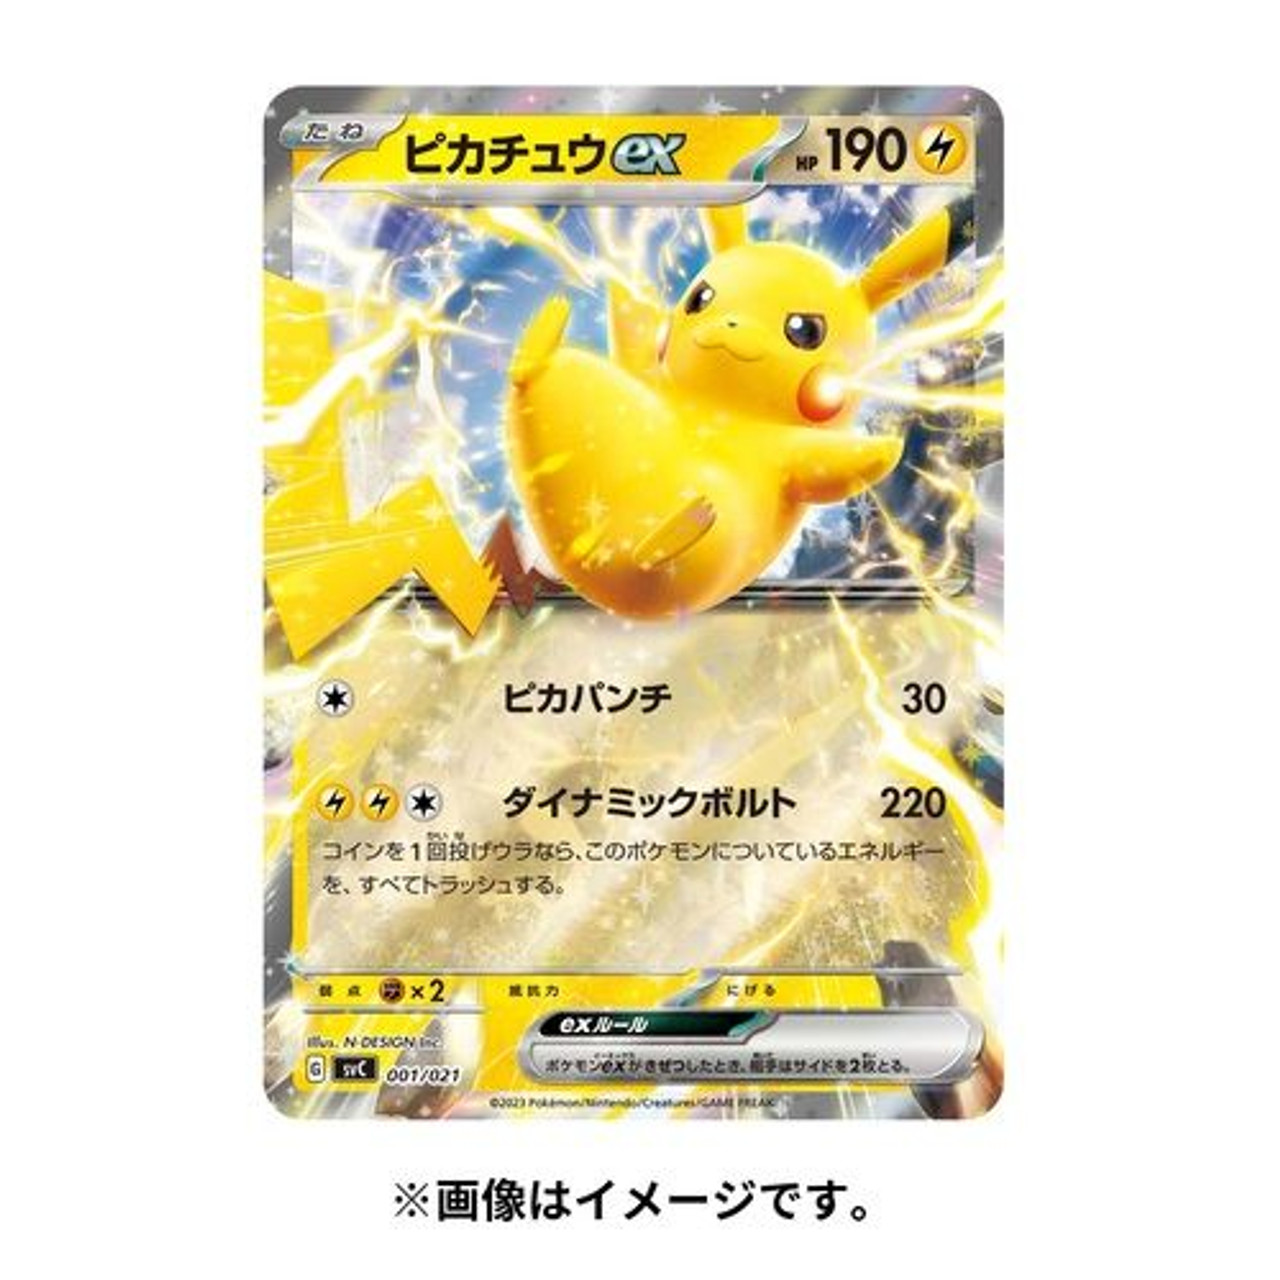 Nintendo Switch Pokemon Violet Pokemon card Pikachu ＆ Art book set Japan  NEW